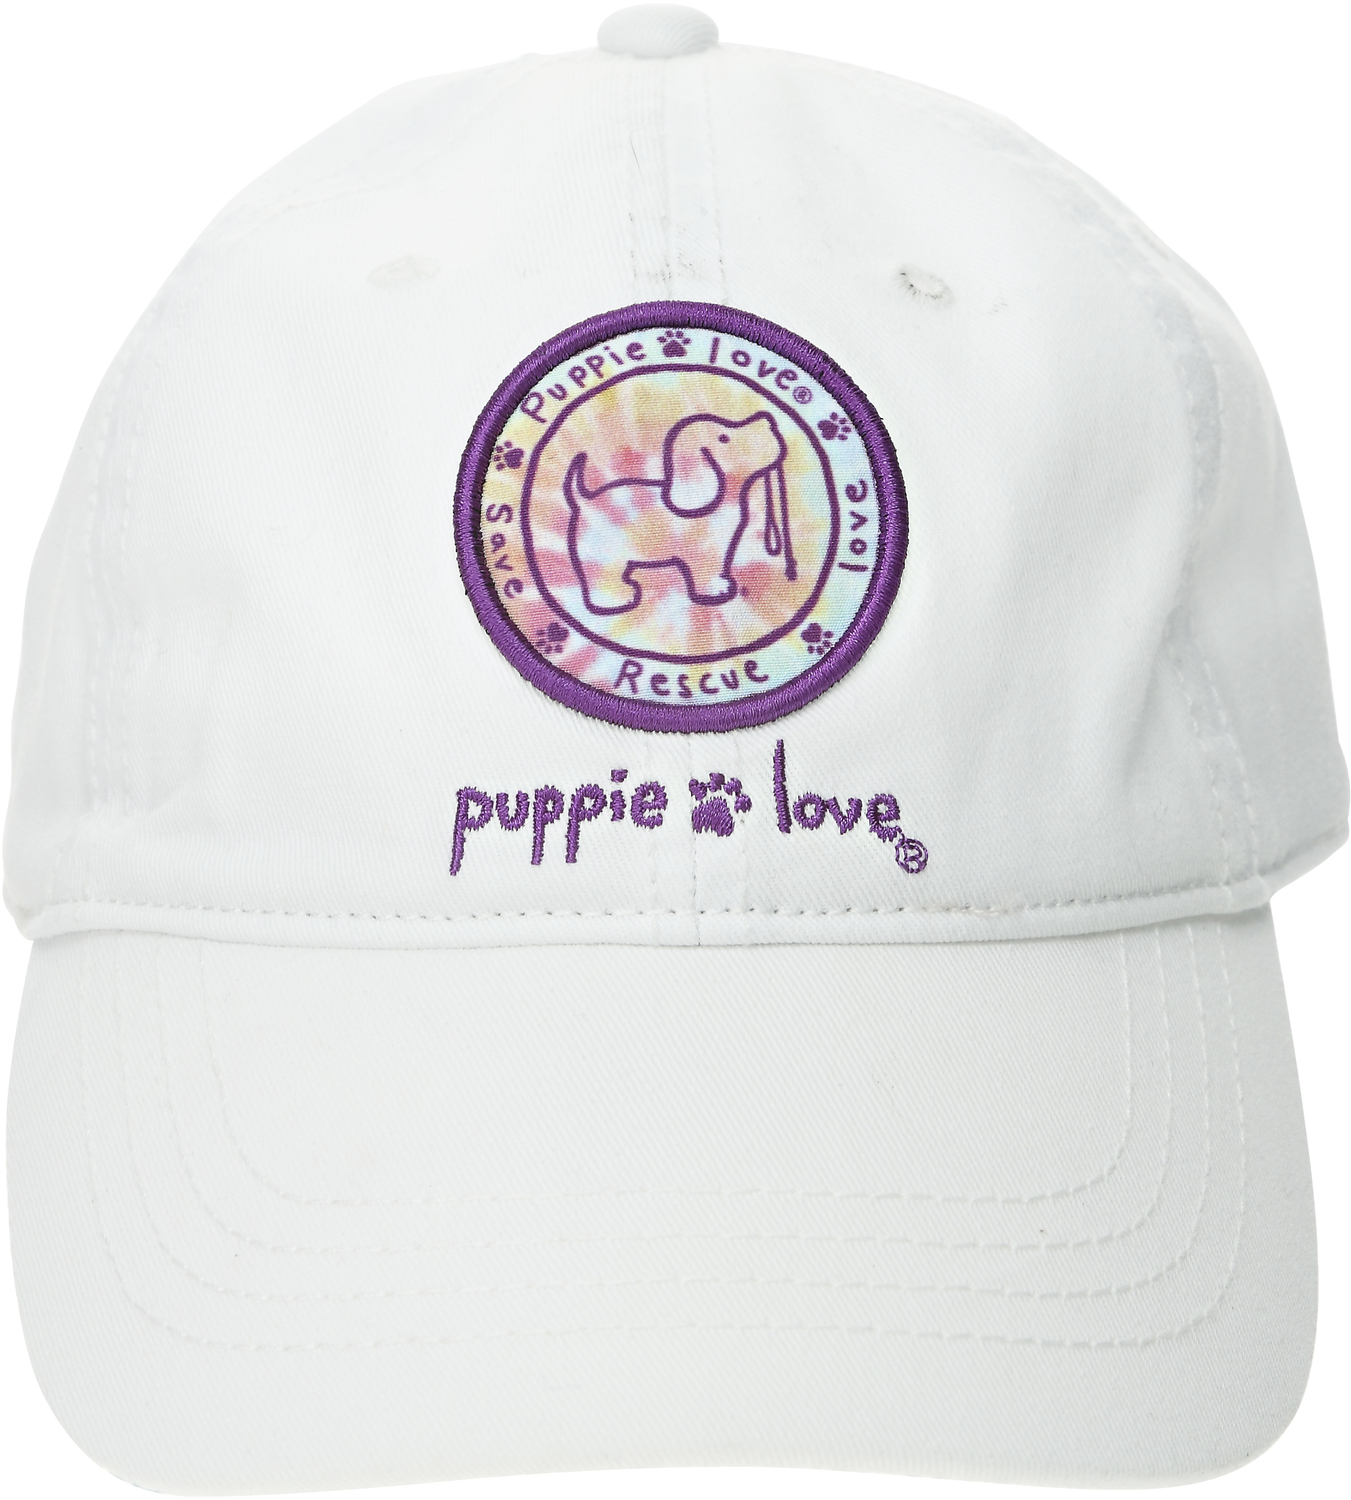 Pink Tie Dye Filled Logo by Puppie Love - Pink Tie Dye Filled Logo - White Adjustable Hat